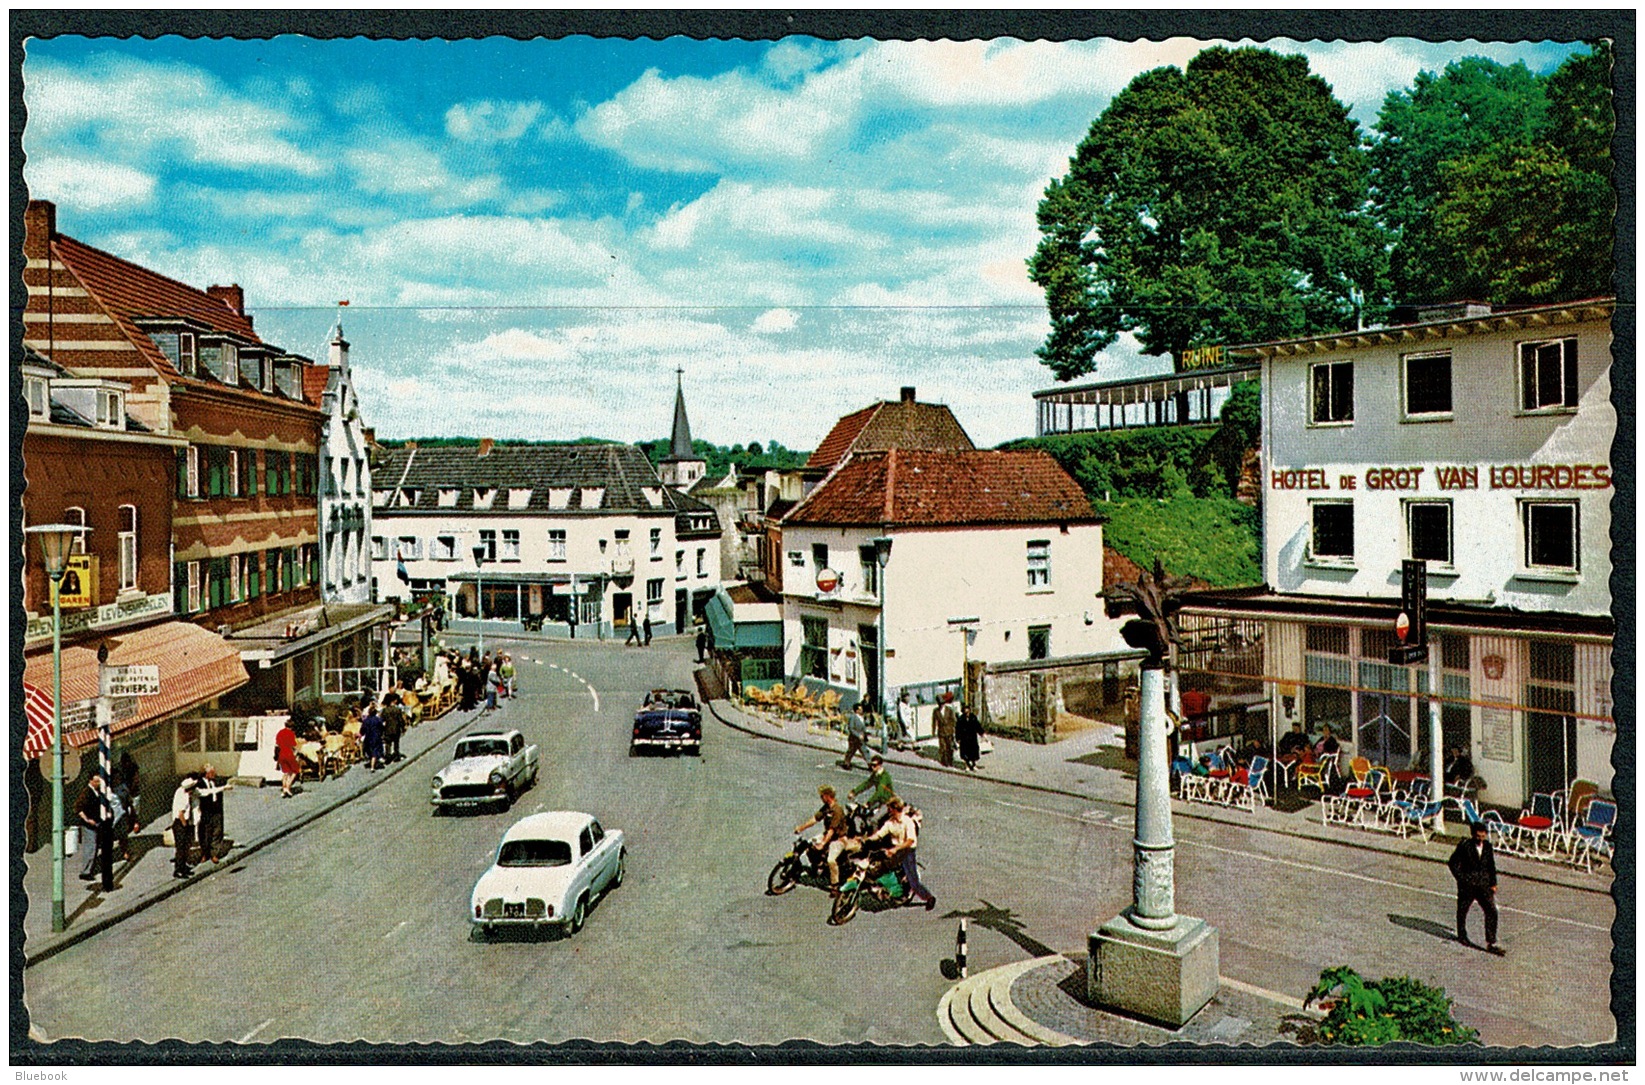 RB 1211 - 7 X Postcards Valkenburg - Limburg Holland Netherlands - Valkenburg